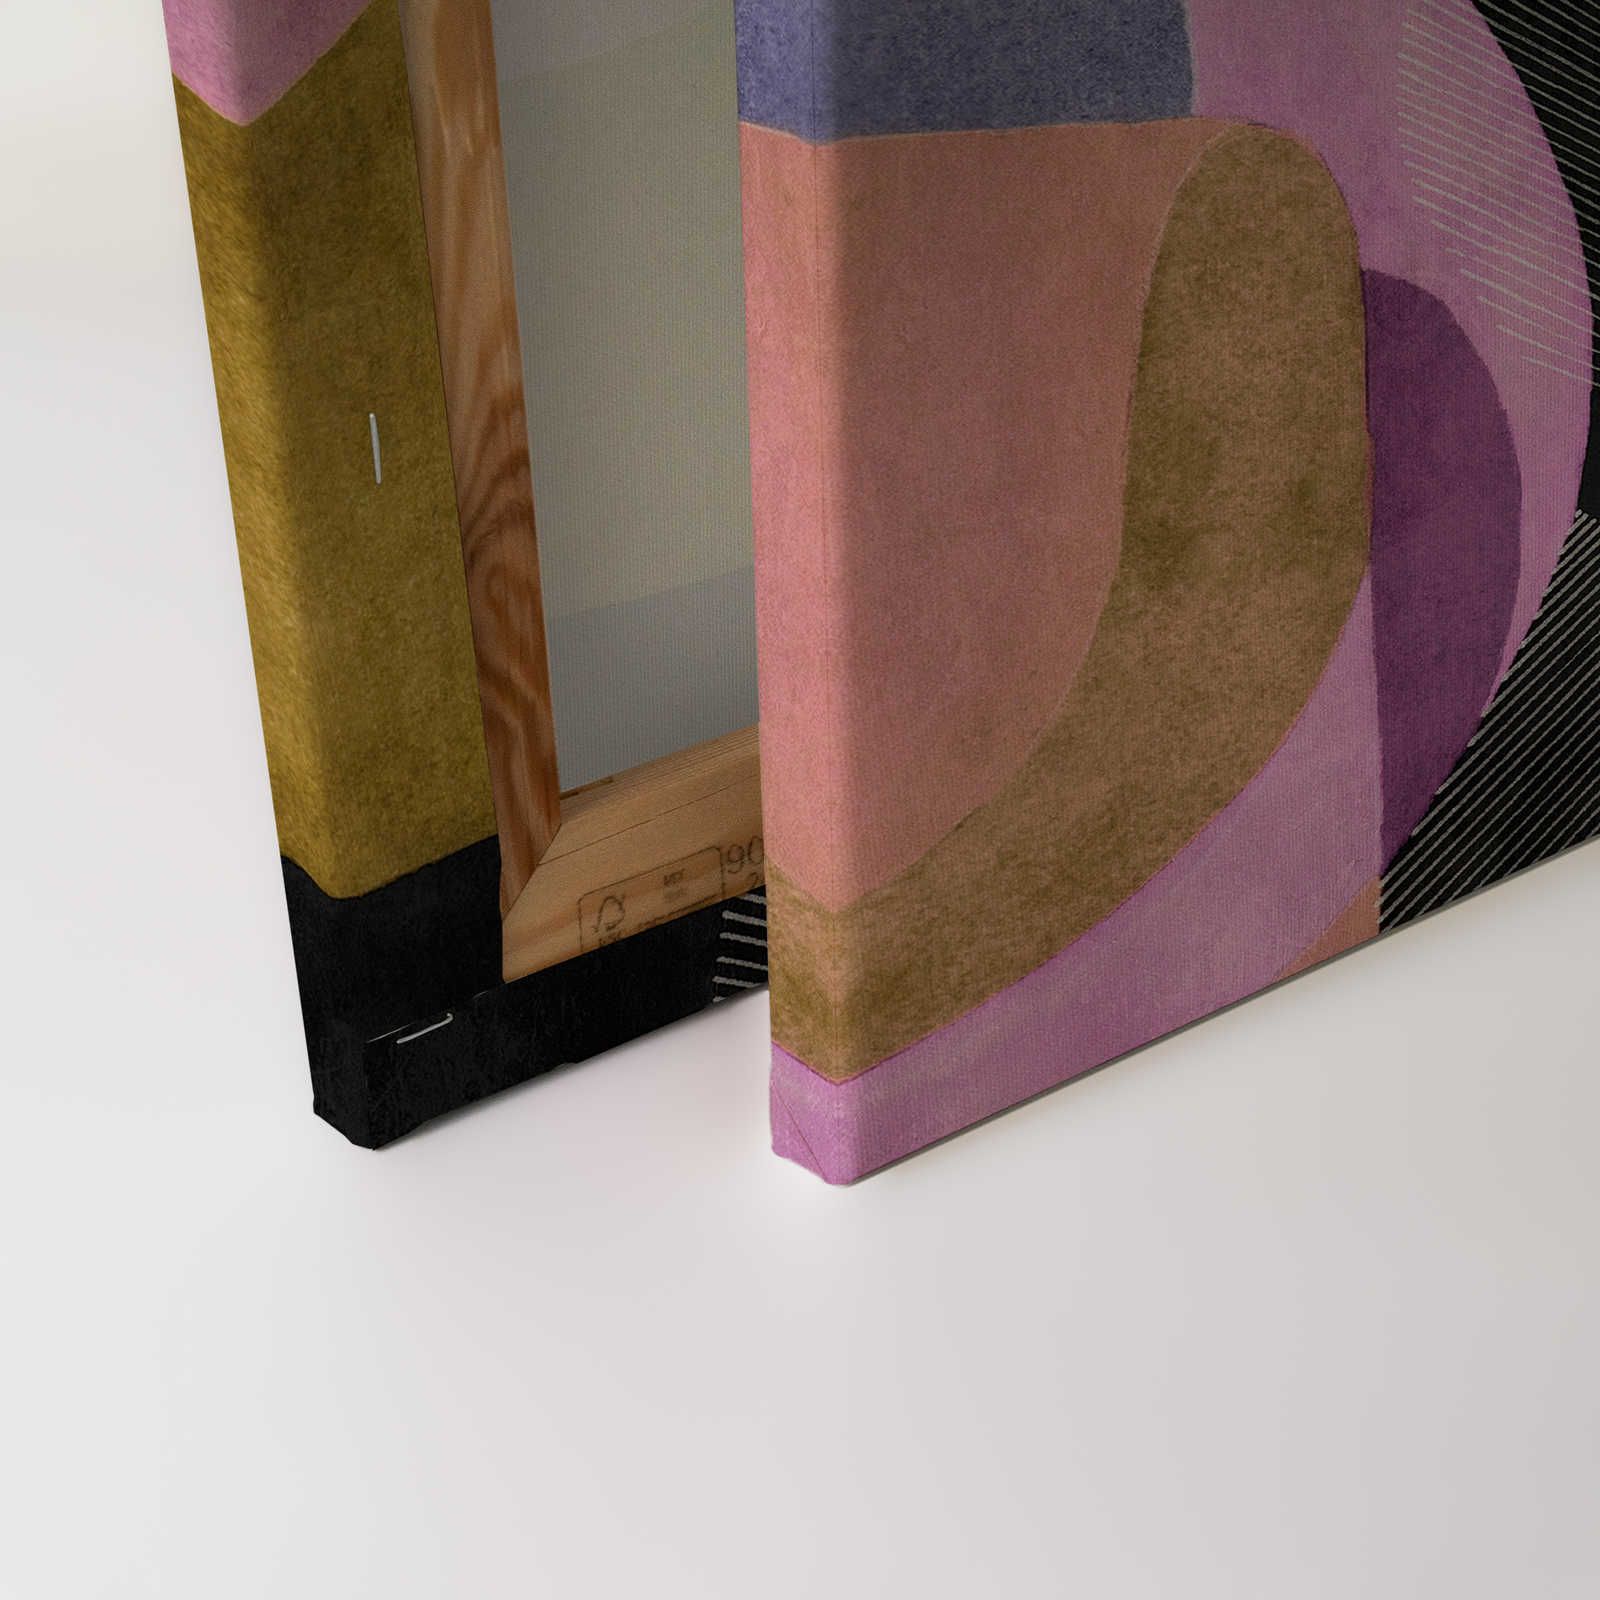             Meeting Place 3 - Leinwandbild Ethno Design im bunten Colour Block Stil – 0,90 m x 0,60 m
        